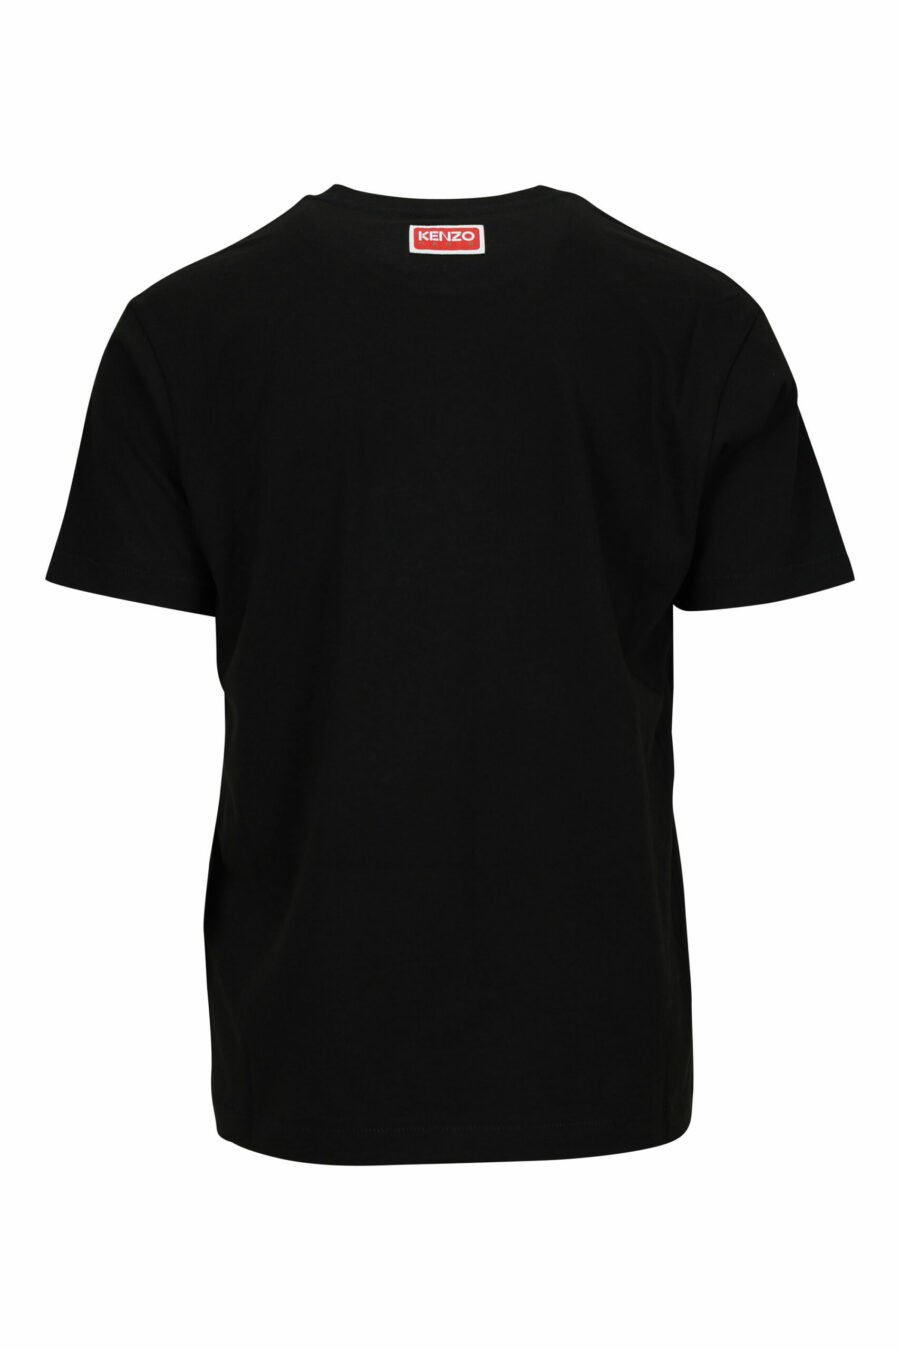 Oversize black T-shirt with large tiger embossed logo - 3612230568068 1 scaled